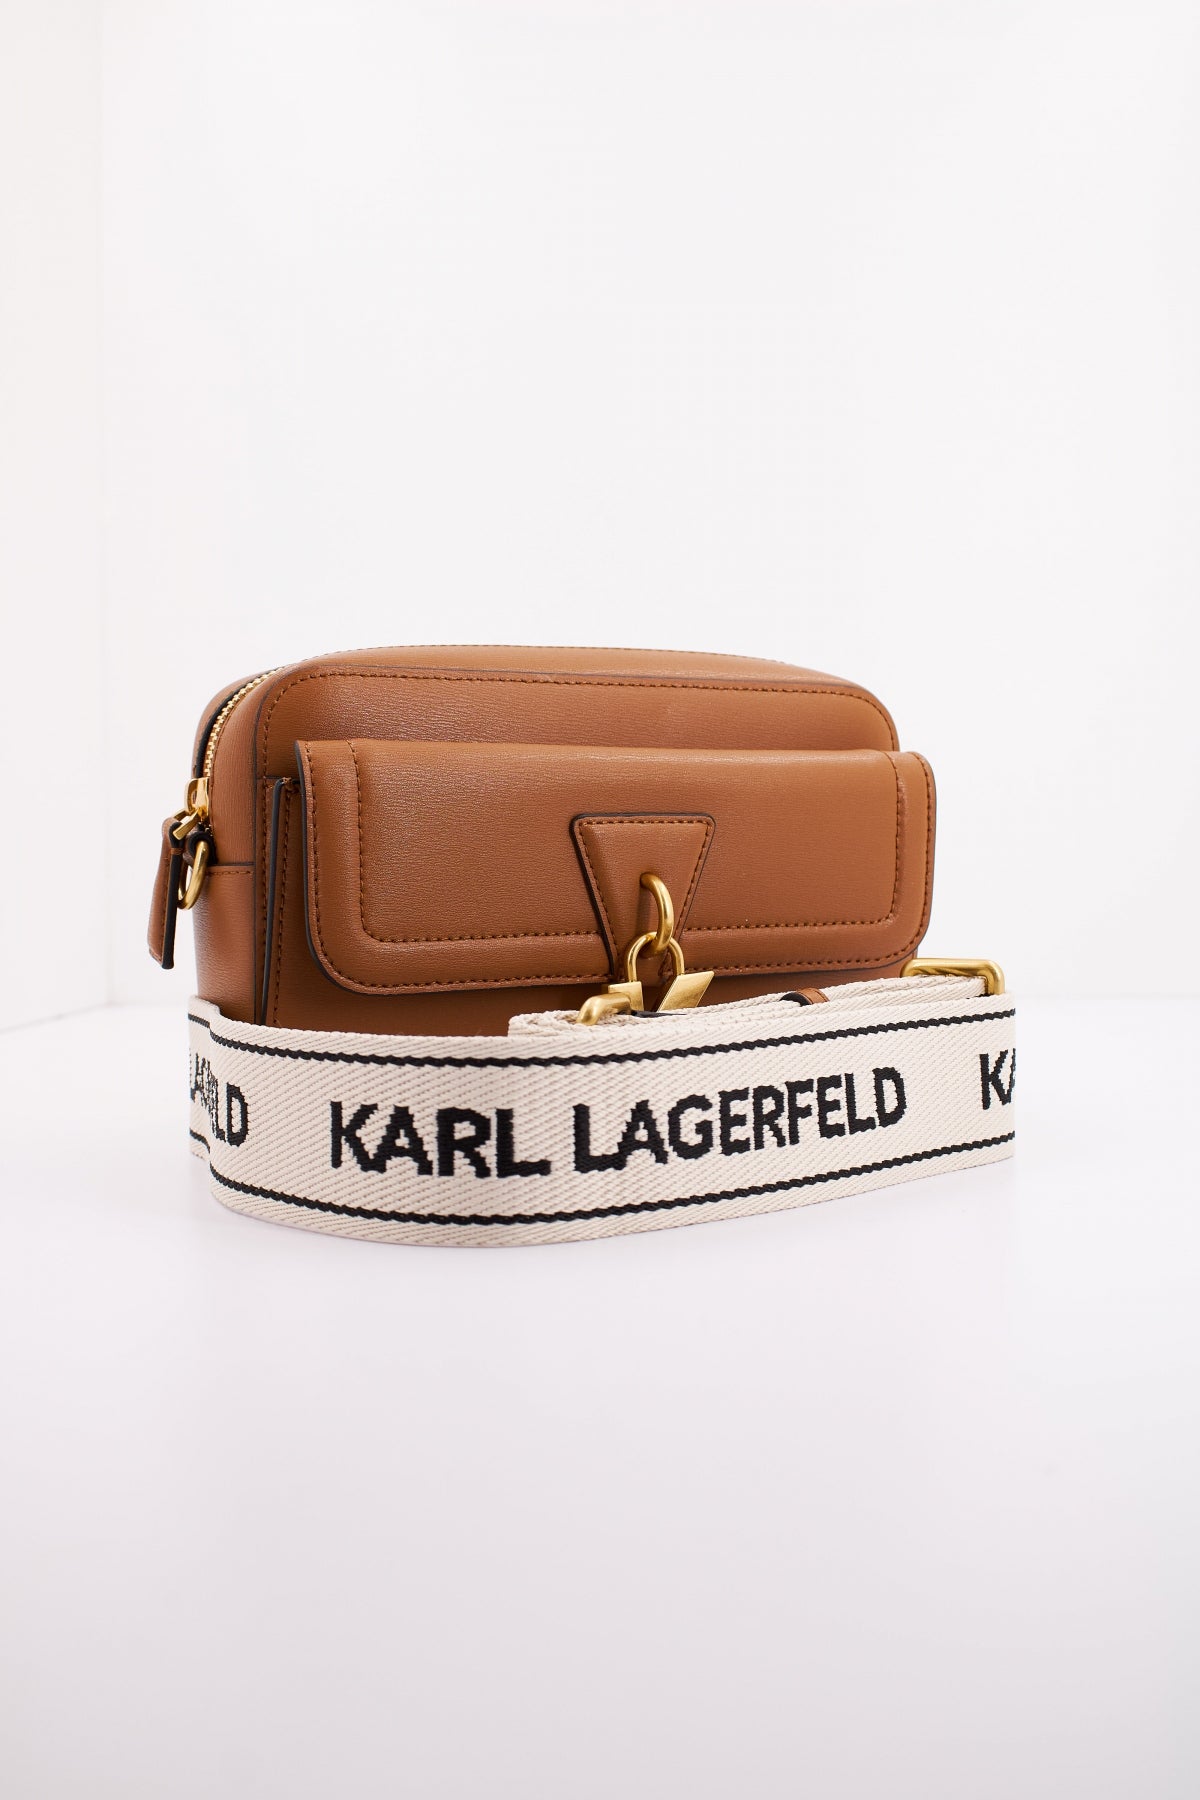 KARL LAGERFELD K/LOCK CAMERABAG en color MARRON  (4)